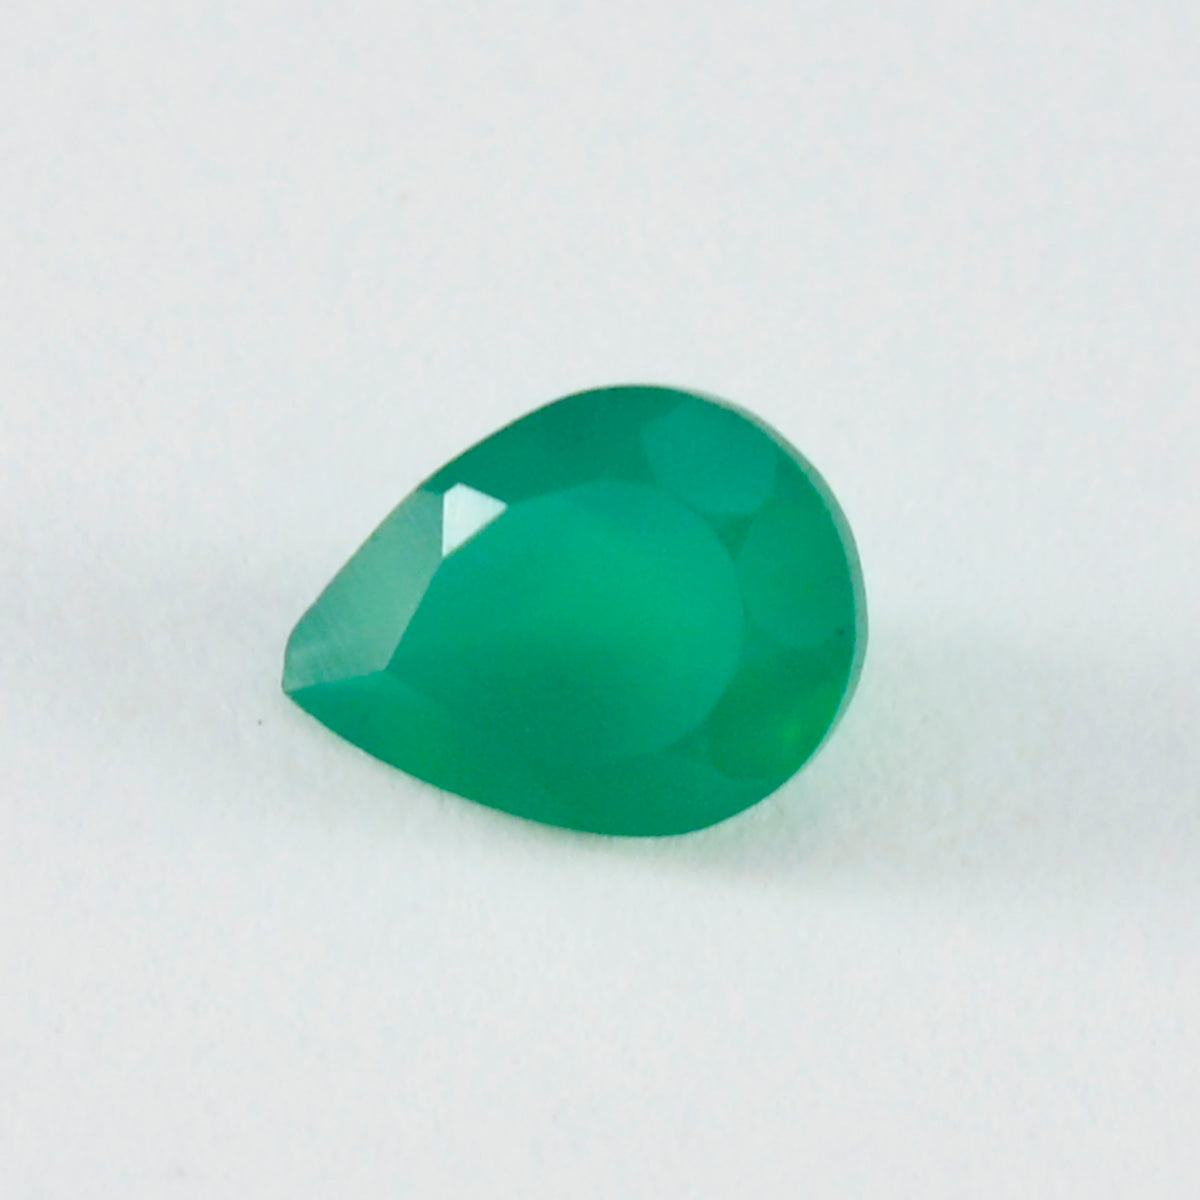 riyogems 1 st naturlig grön onyx fasetterad 12x16 mm päronform aaa kvalitets lösa ädelstenar